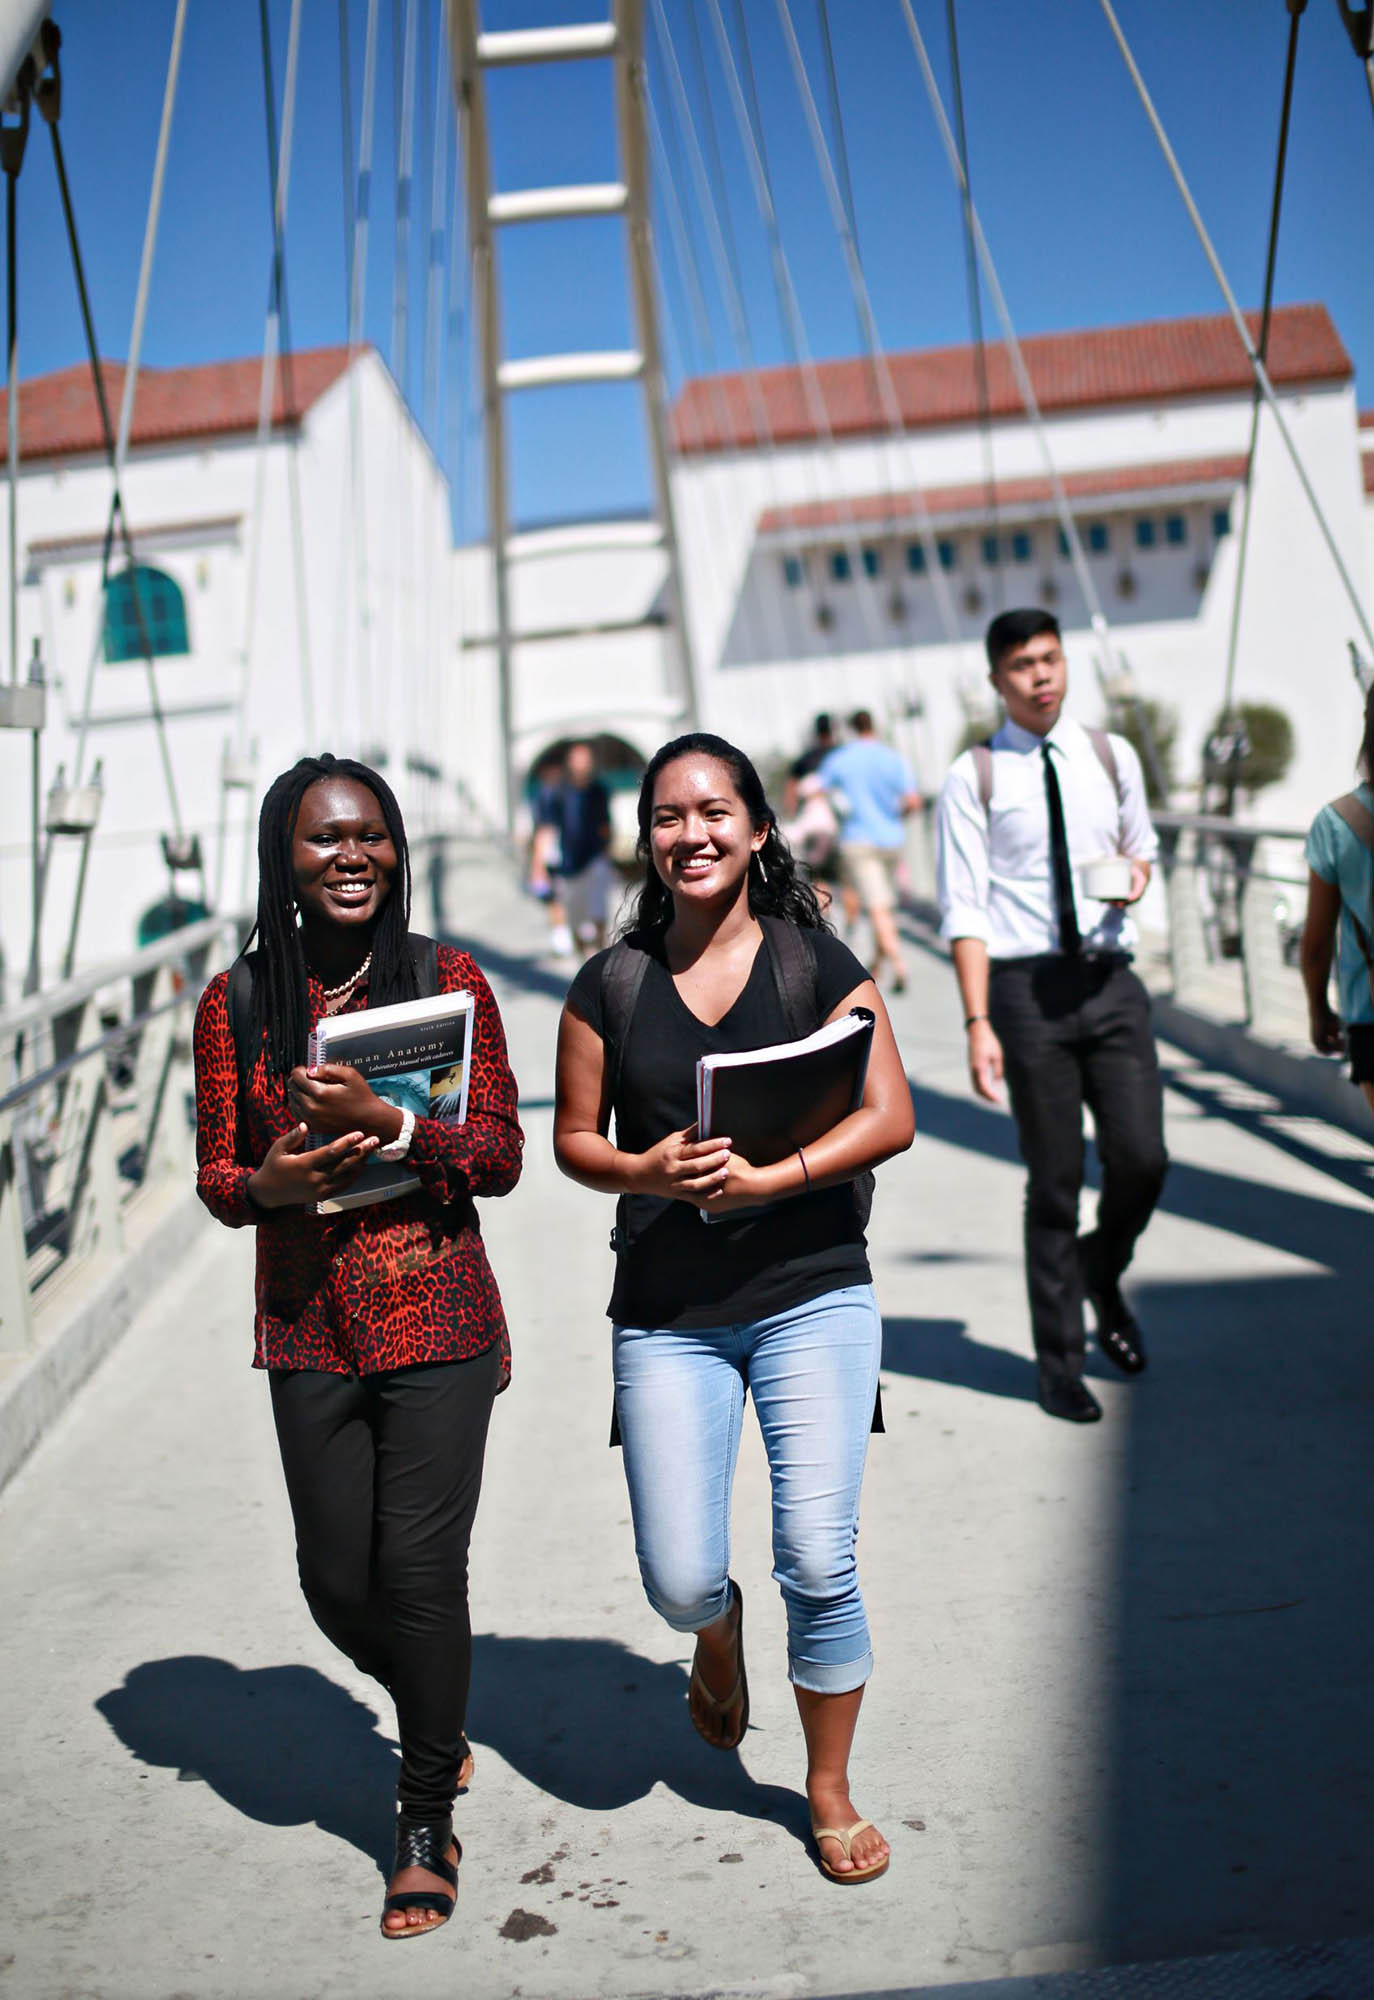 Students walking on Aztec Bridge